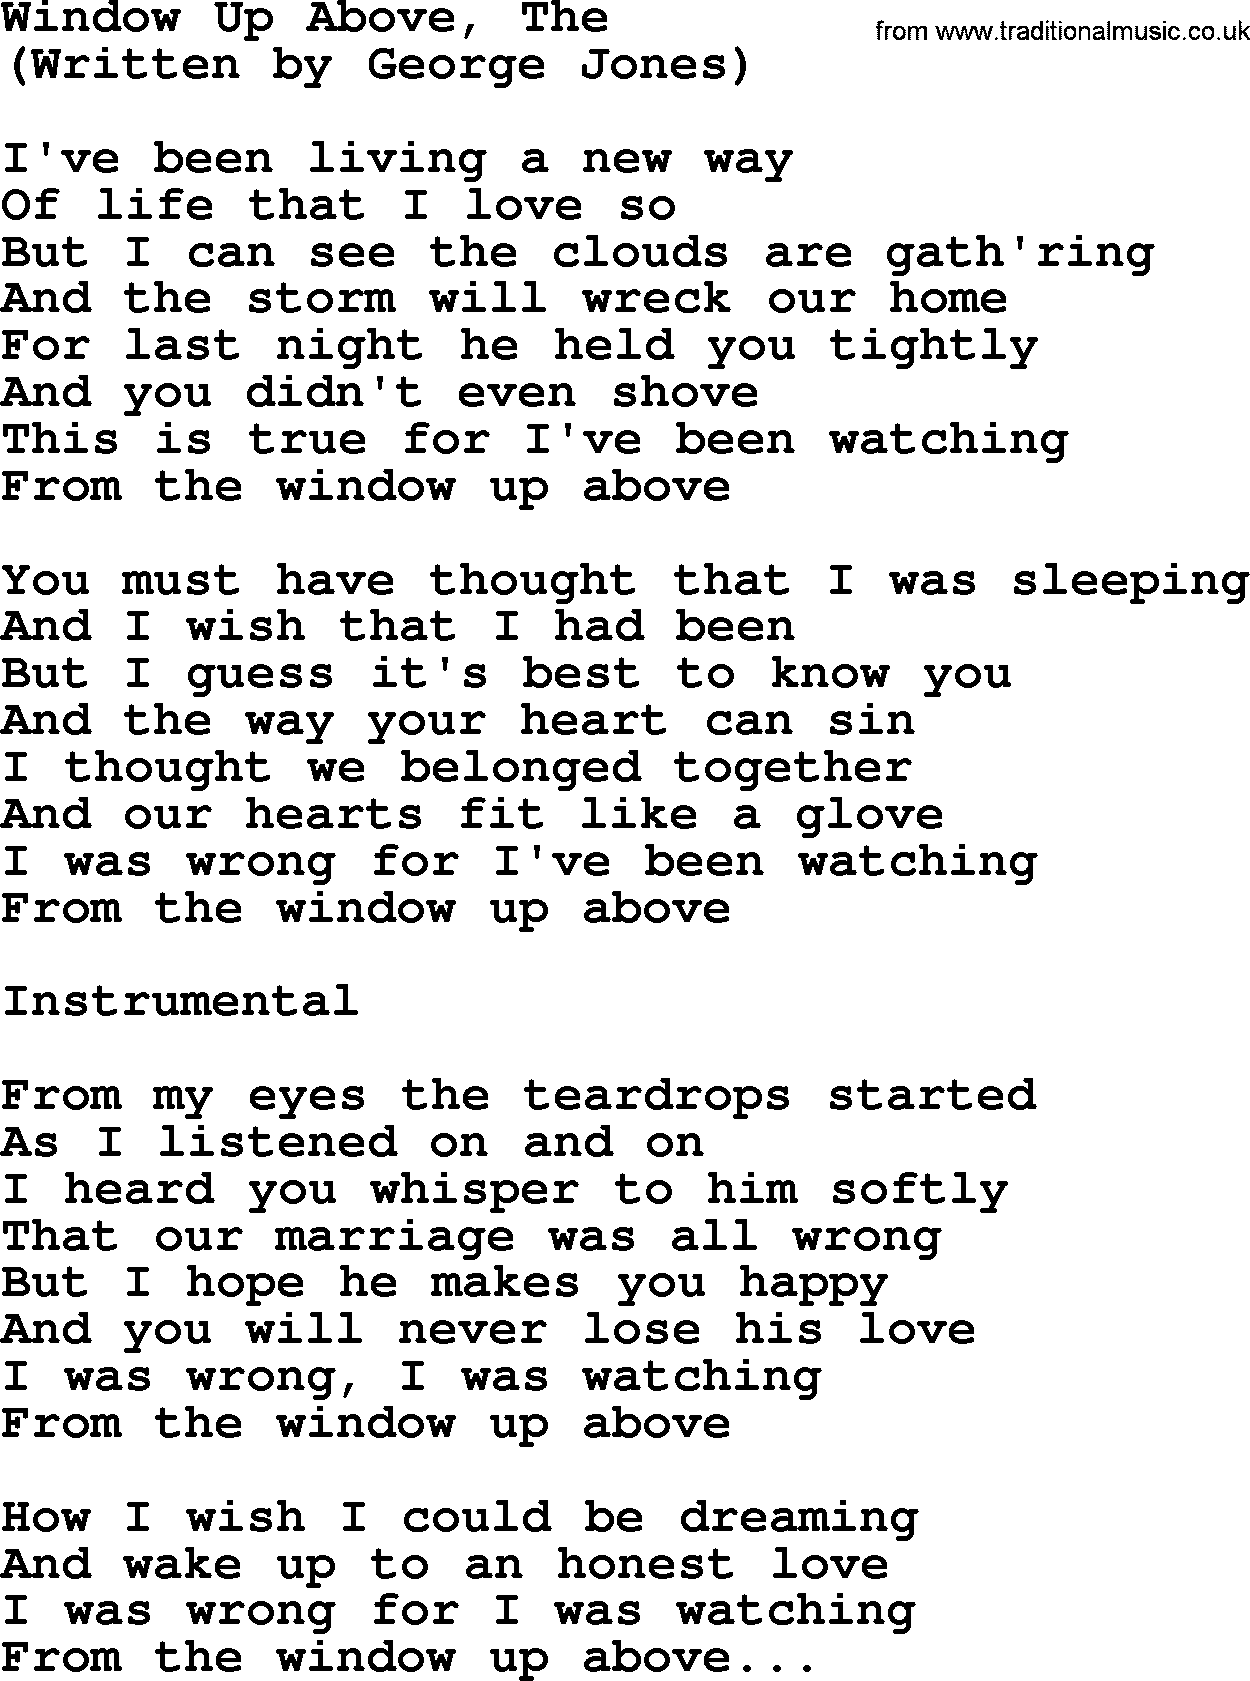 George Jones song: Window Up Above, The, lyrics